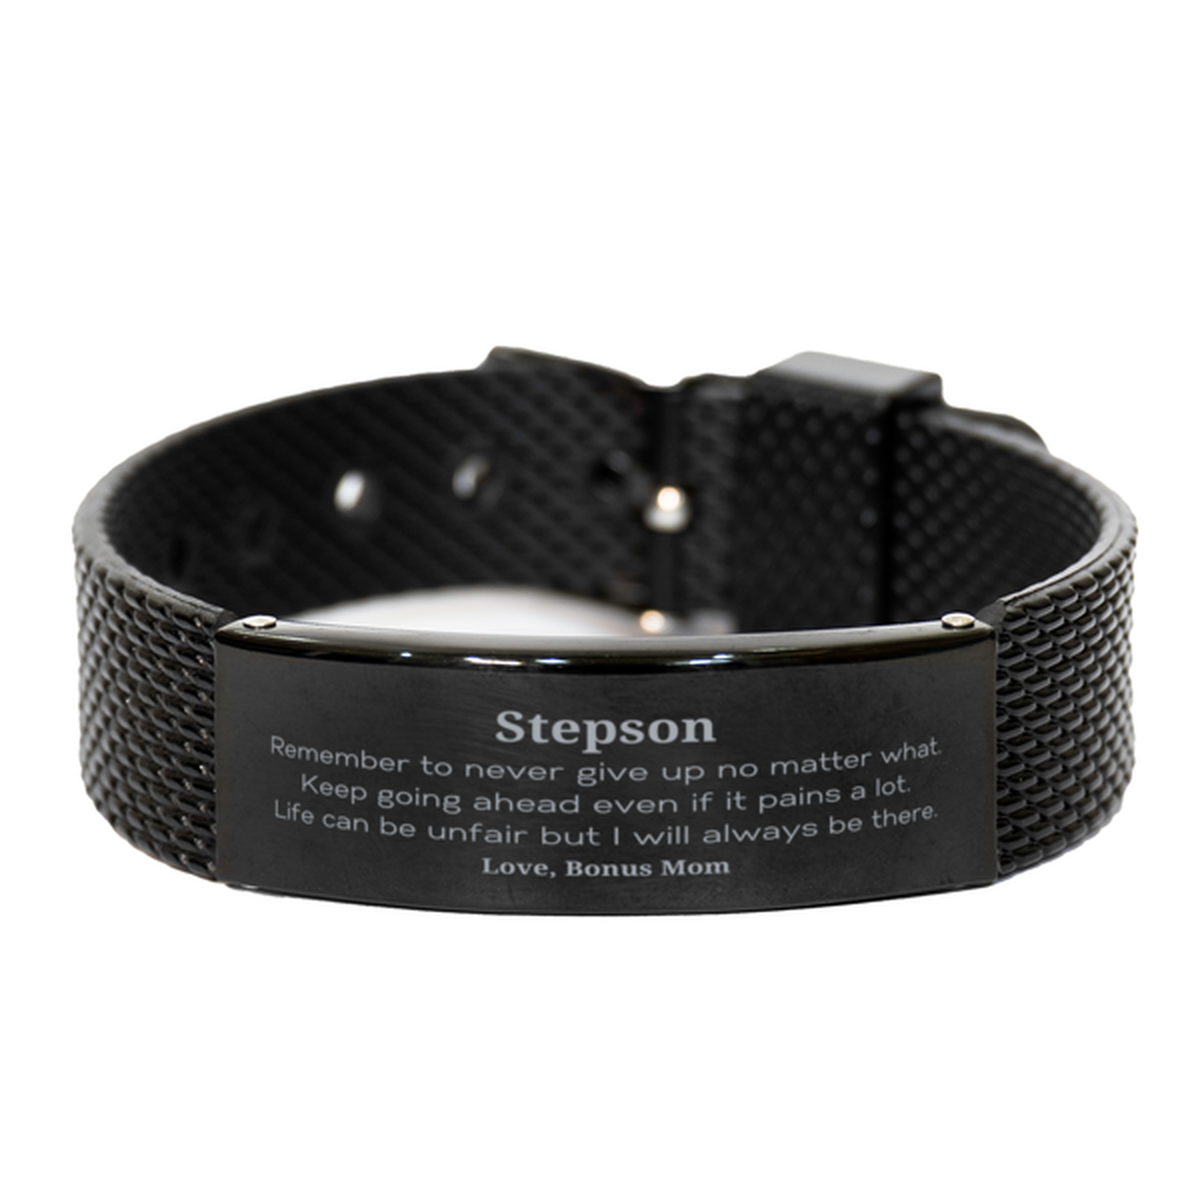 Stepson Motivational Gifts from Bonus Mom, Remember to never give up no matter what, Inspirational Birthday Black Shark Mesh Bracelet for Stepson